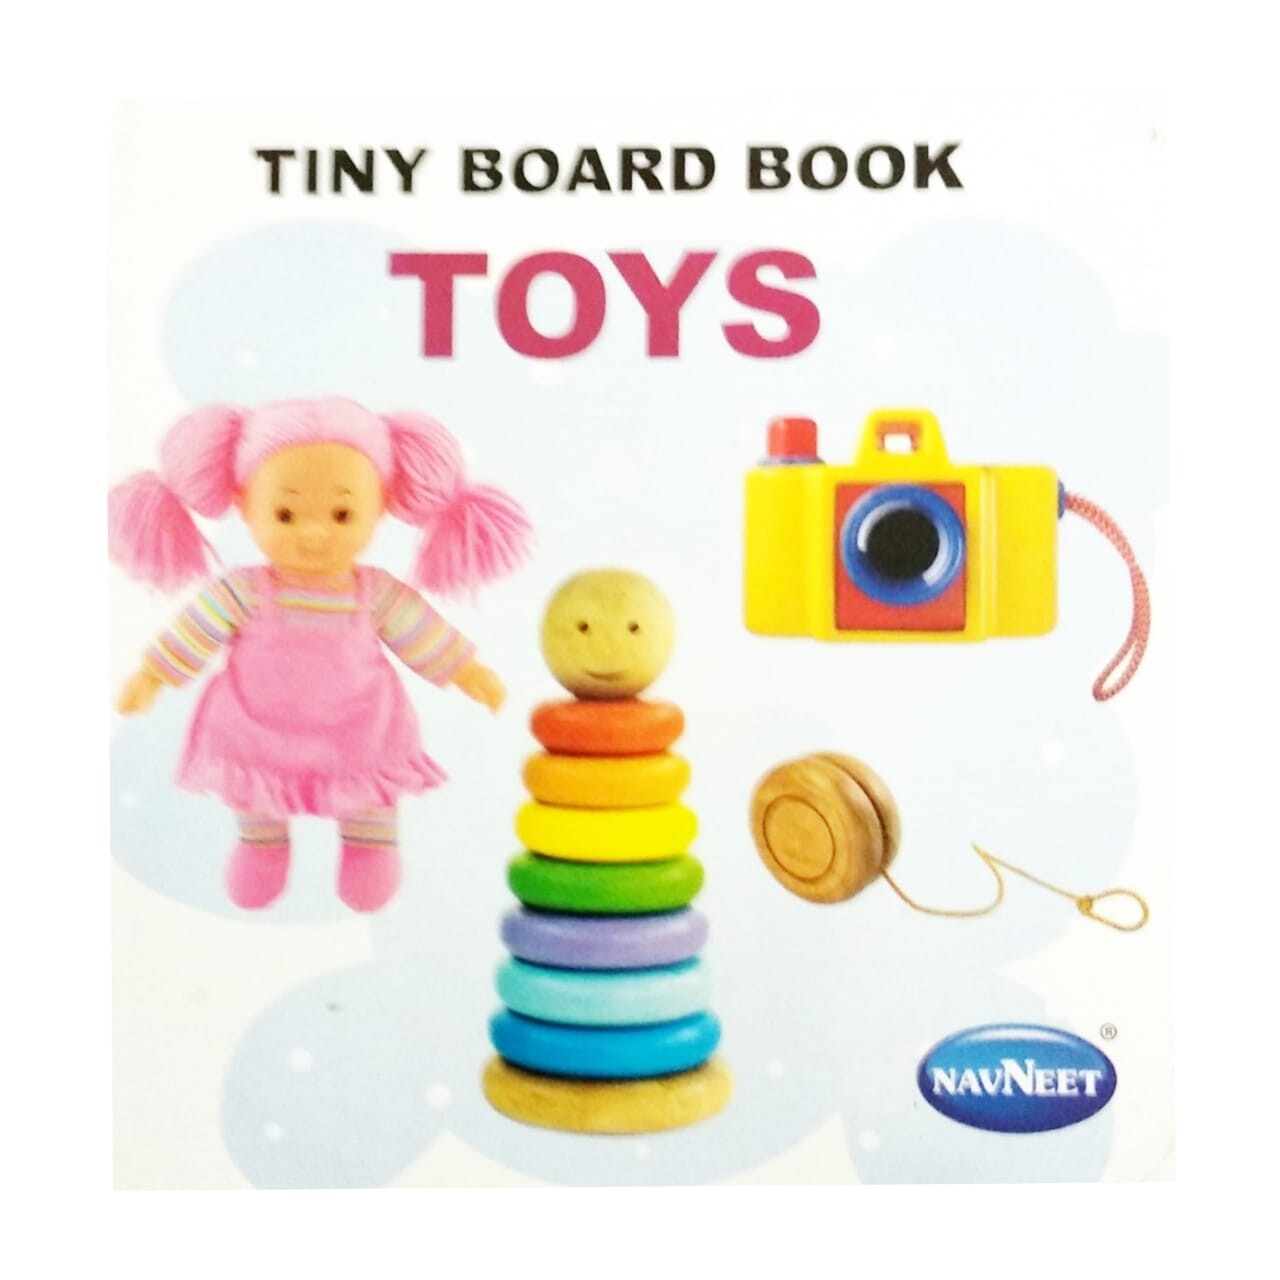 Tiny Board Books (English Edition) - Toys & Vdhicles set of 2